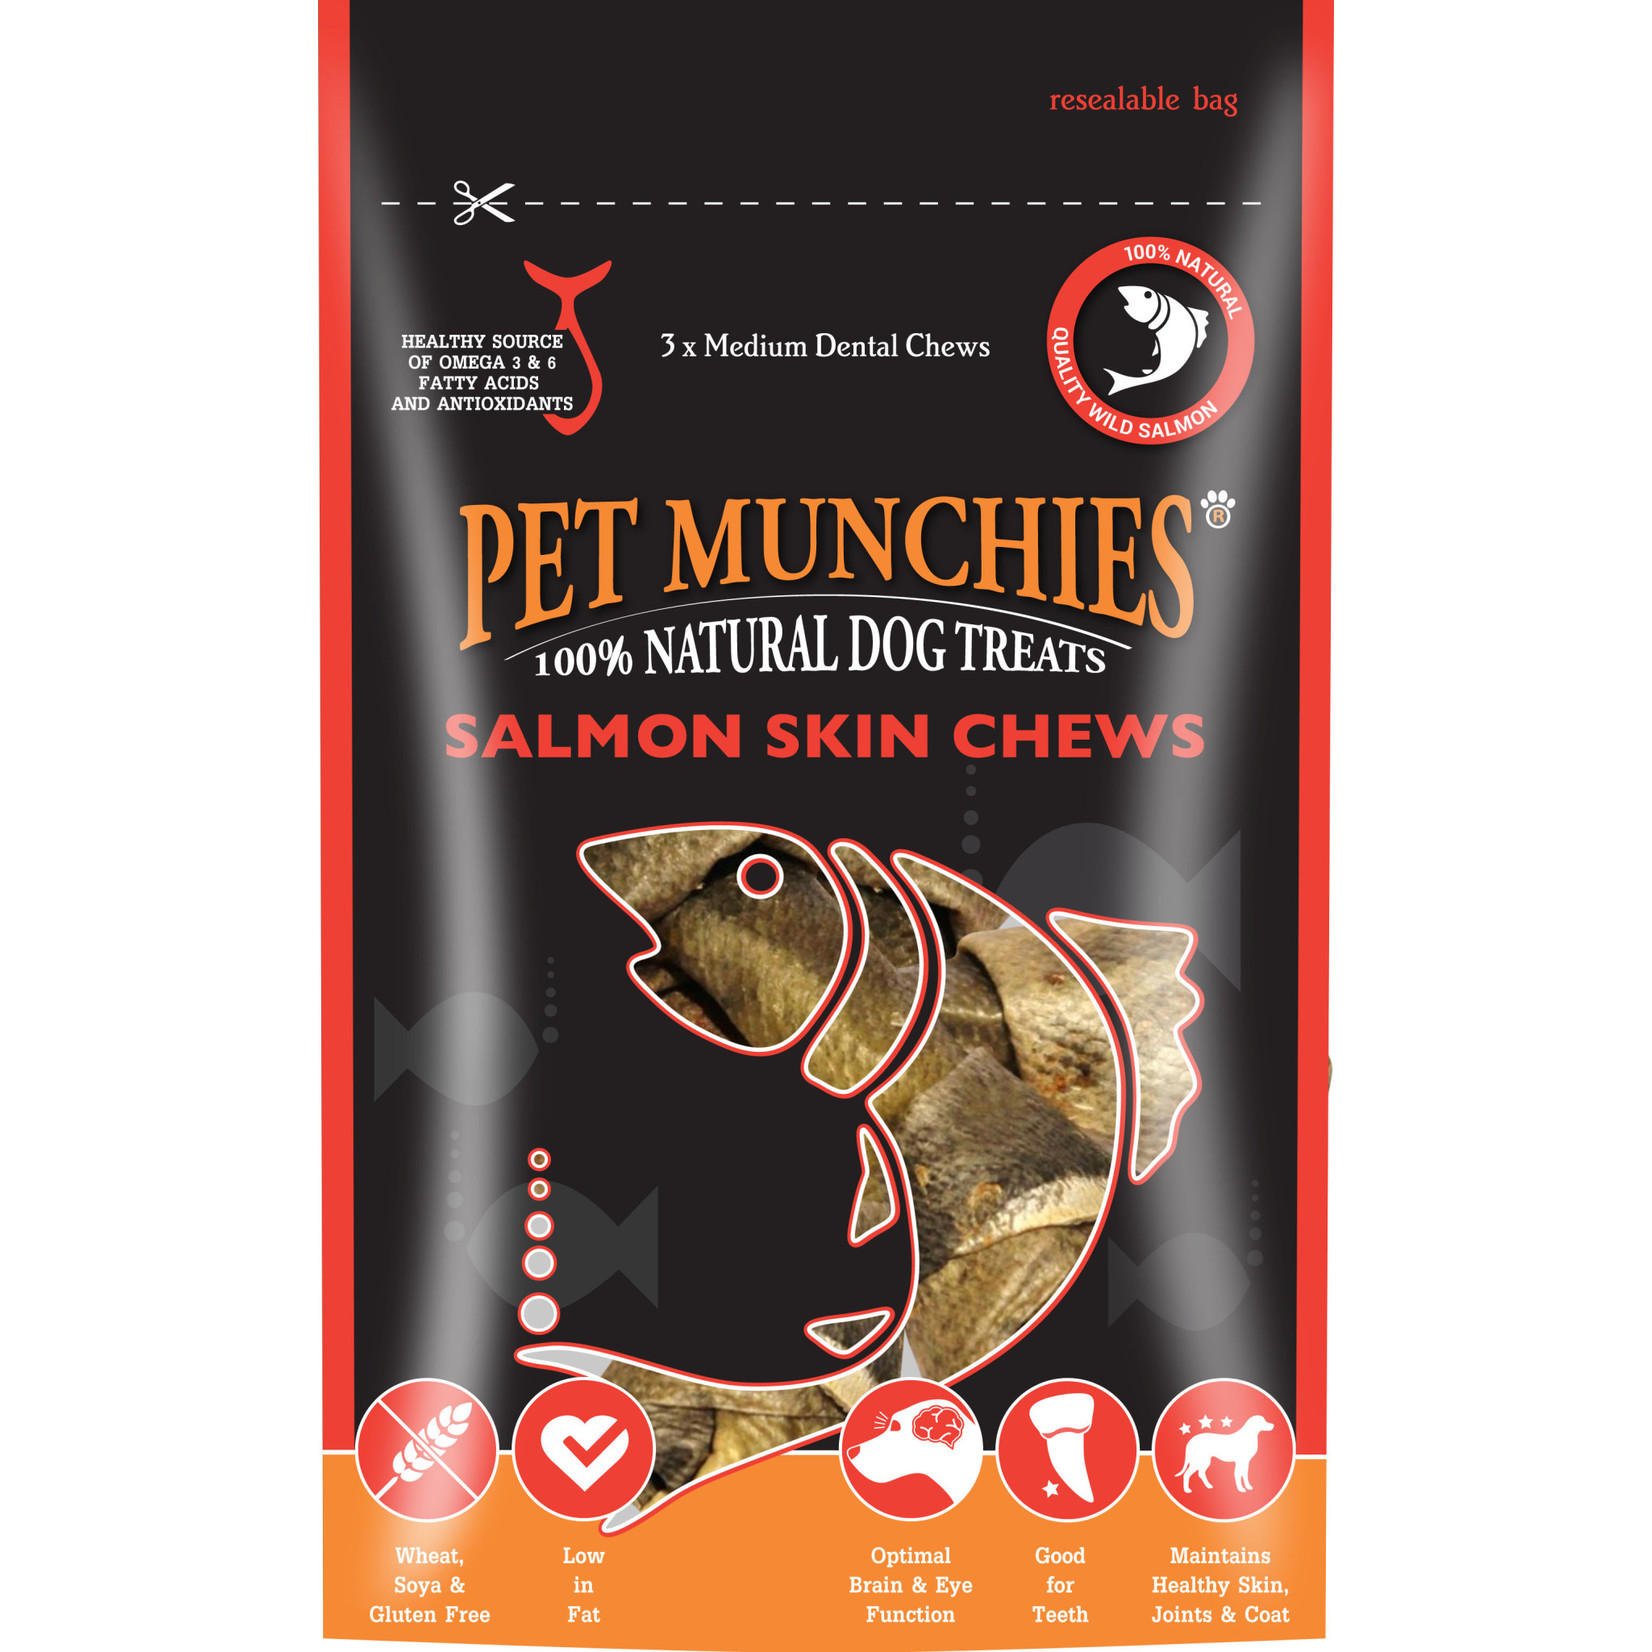 Pet Munchies Salmon Skin Chews 100% Natural Dog Treats, 90g